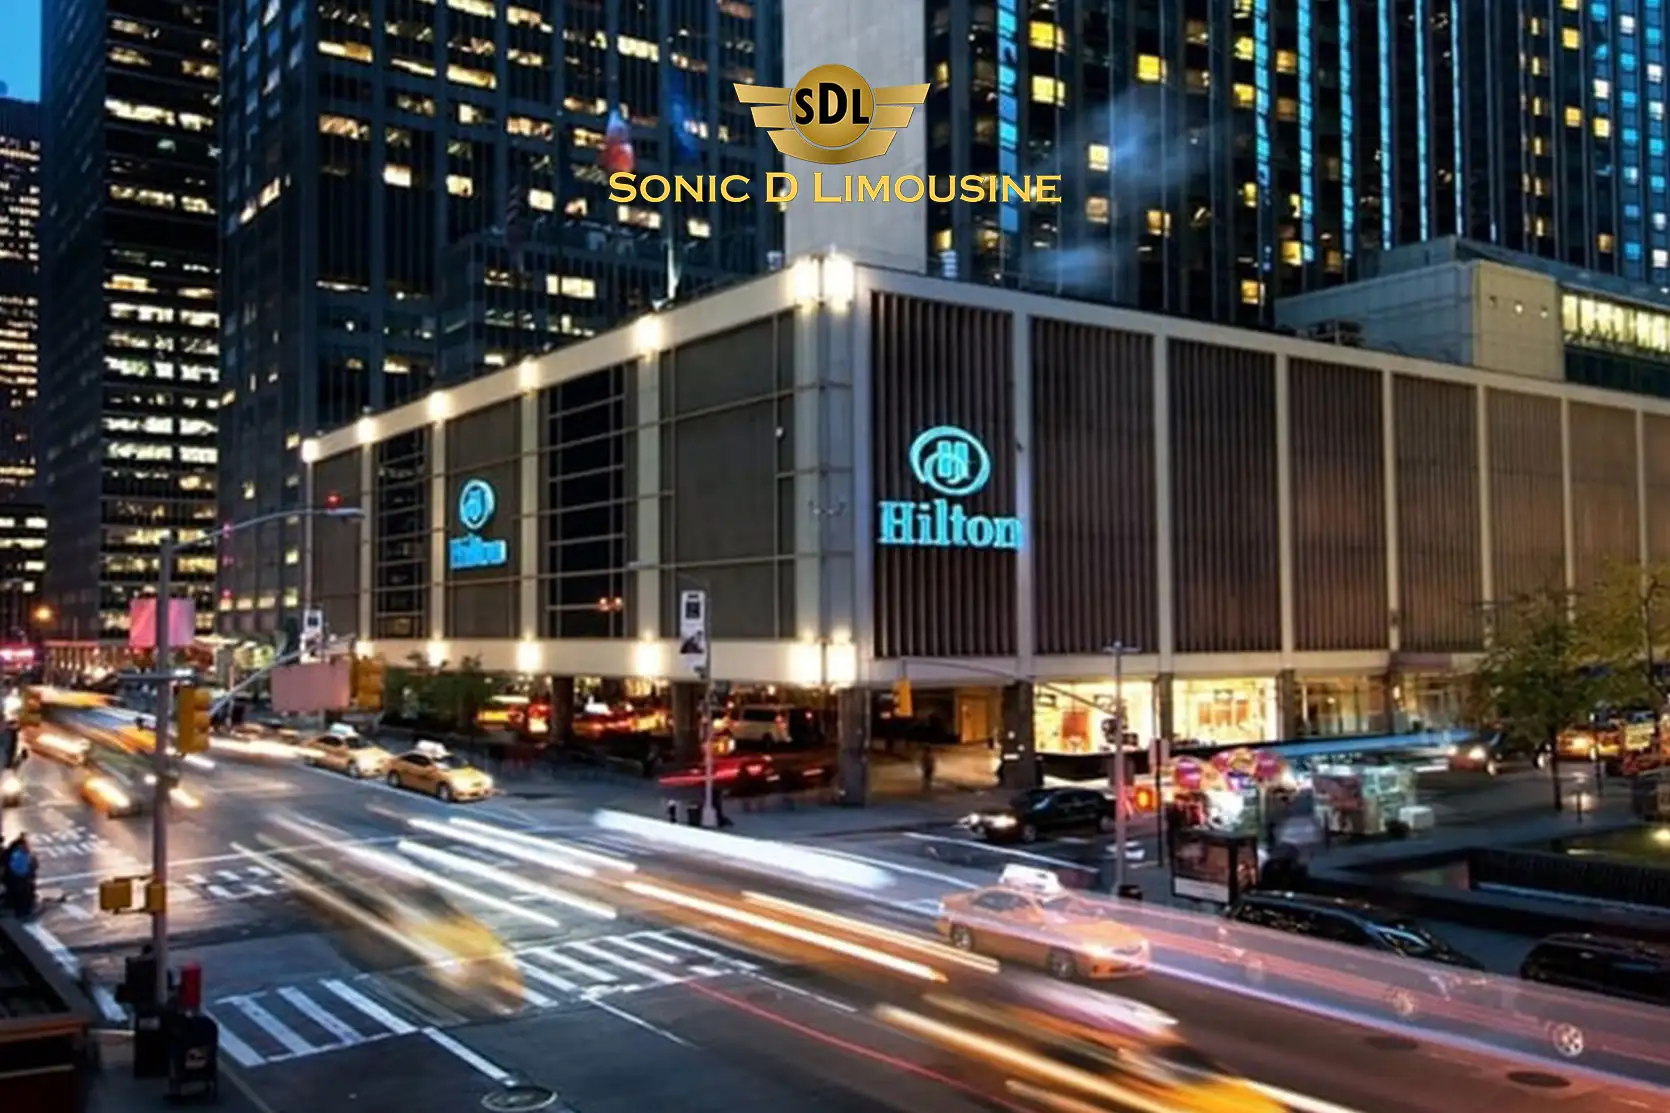 Sonic D Limousine is the premier transportation provider in New York Hilton Midtown: A Comprehensive Transportation Guide